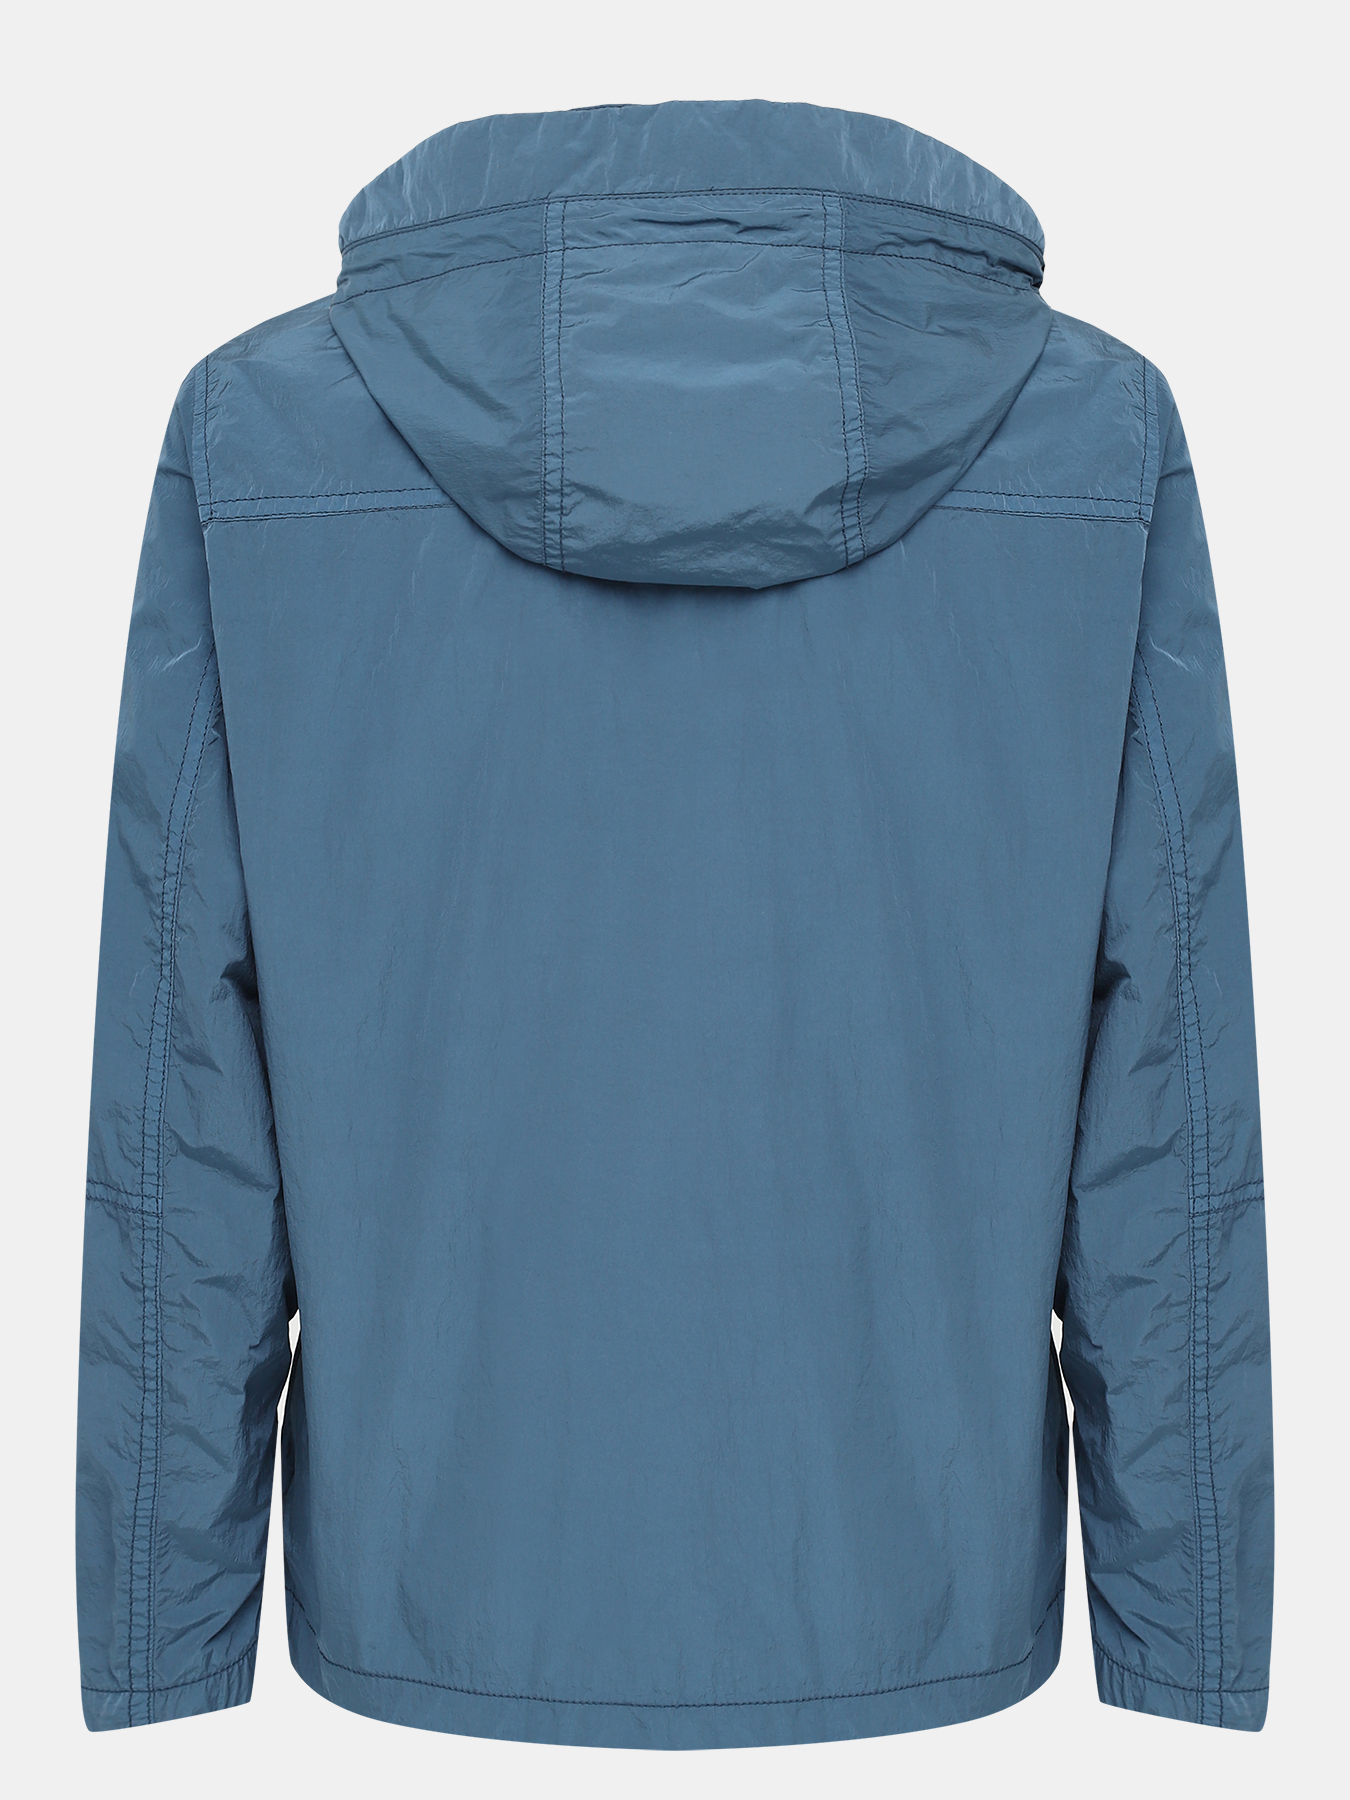 Куртка Odell D BOSS 421179-027, цвет синий, размер 52 - фото 2